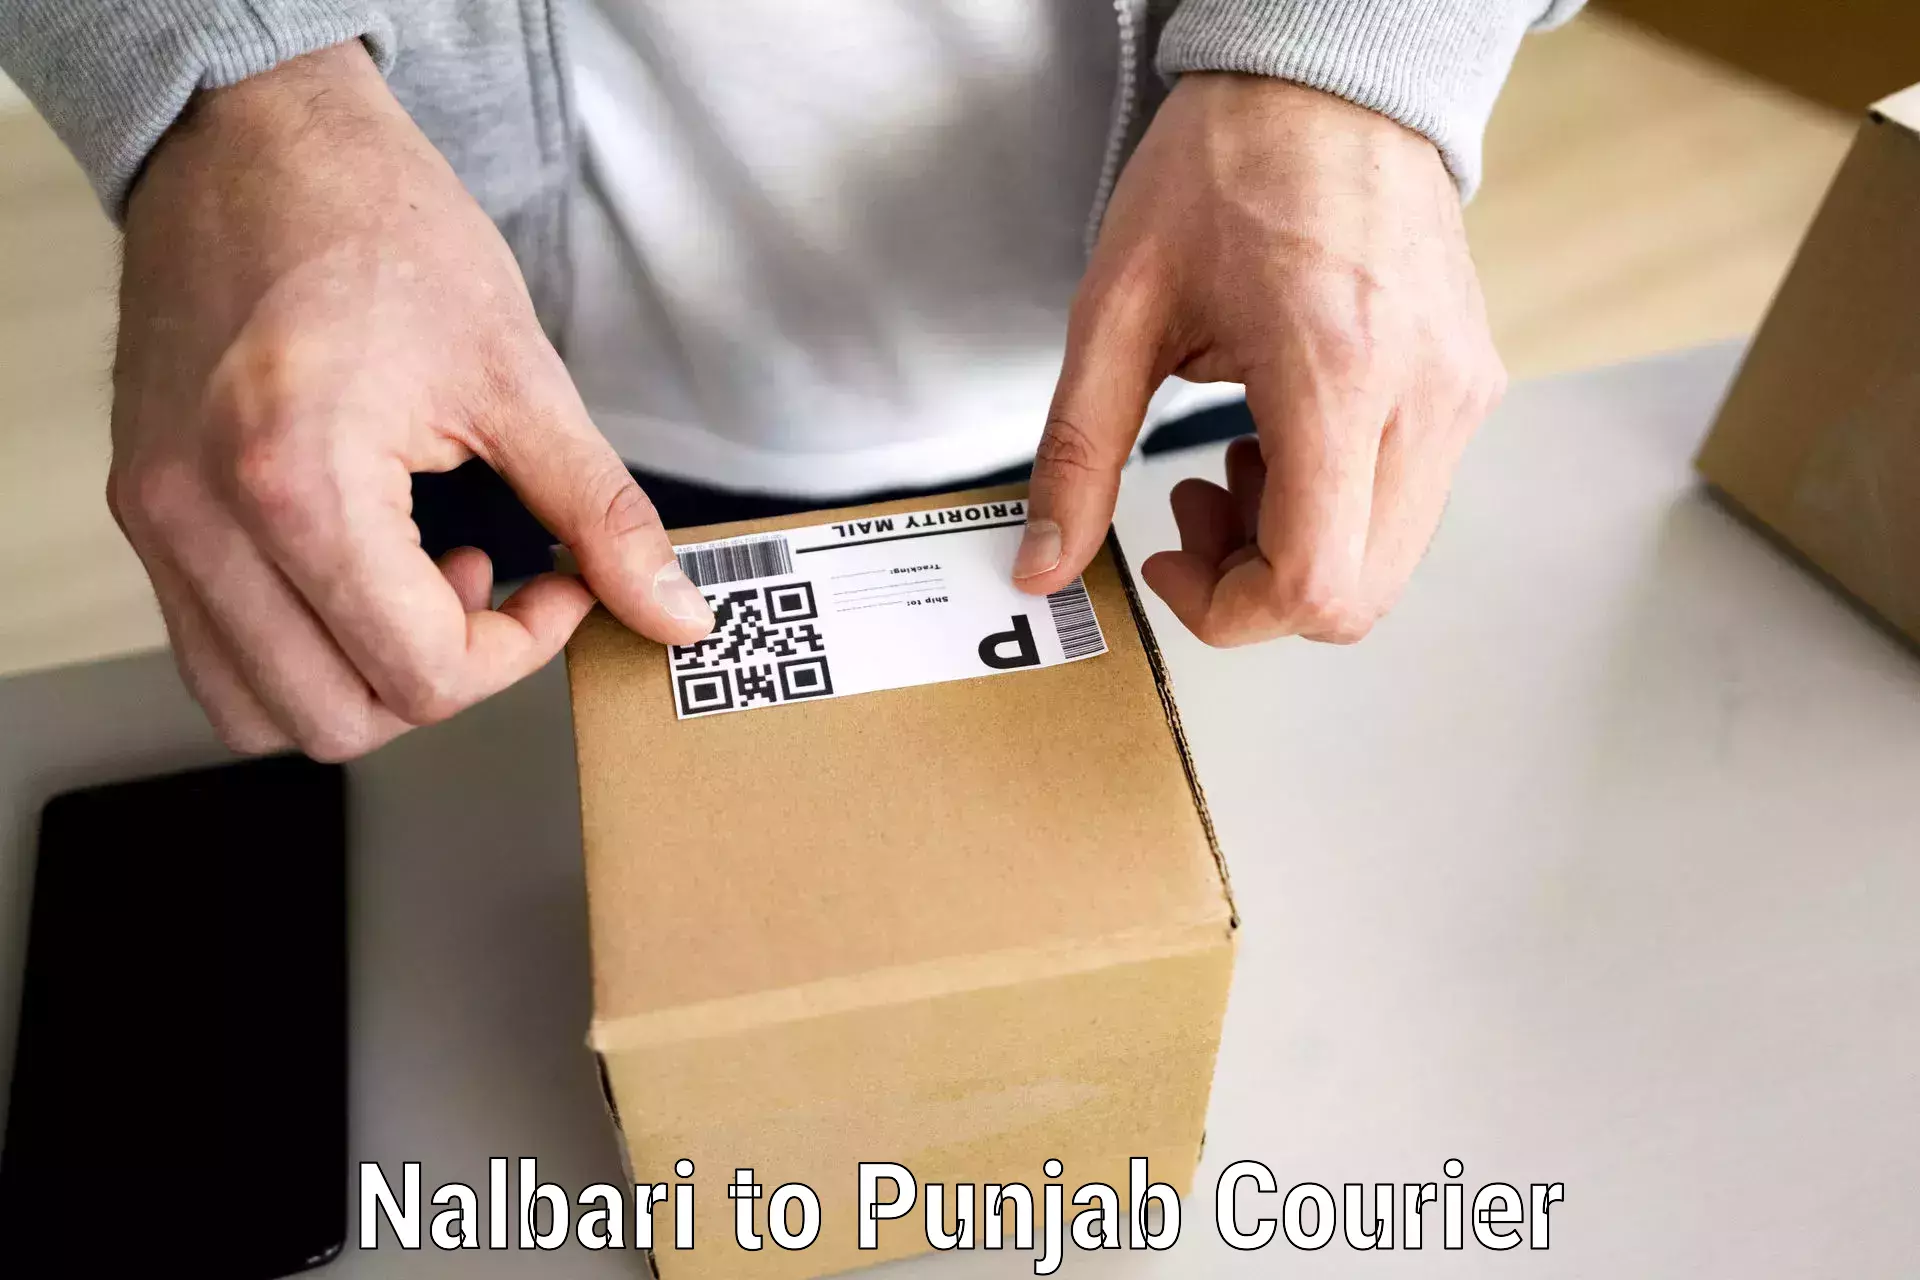 Professional moving company Nalbari to Faridkot